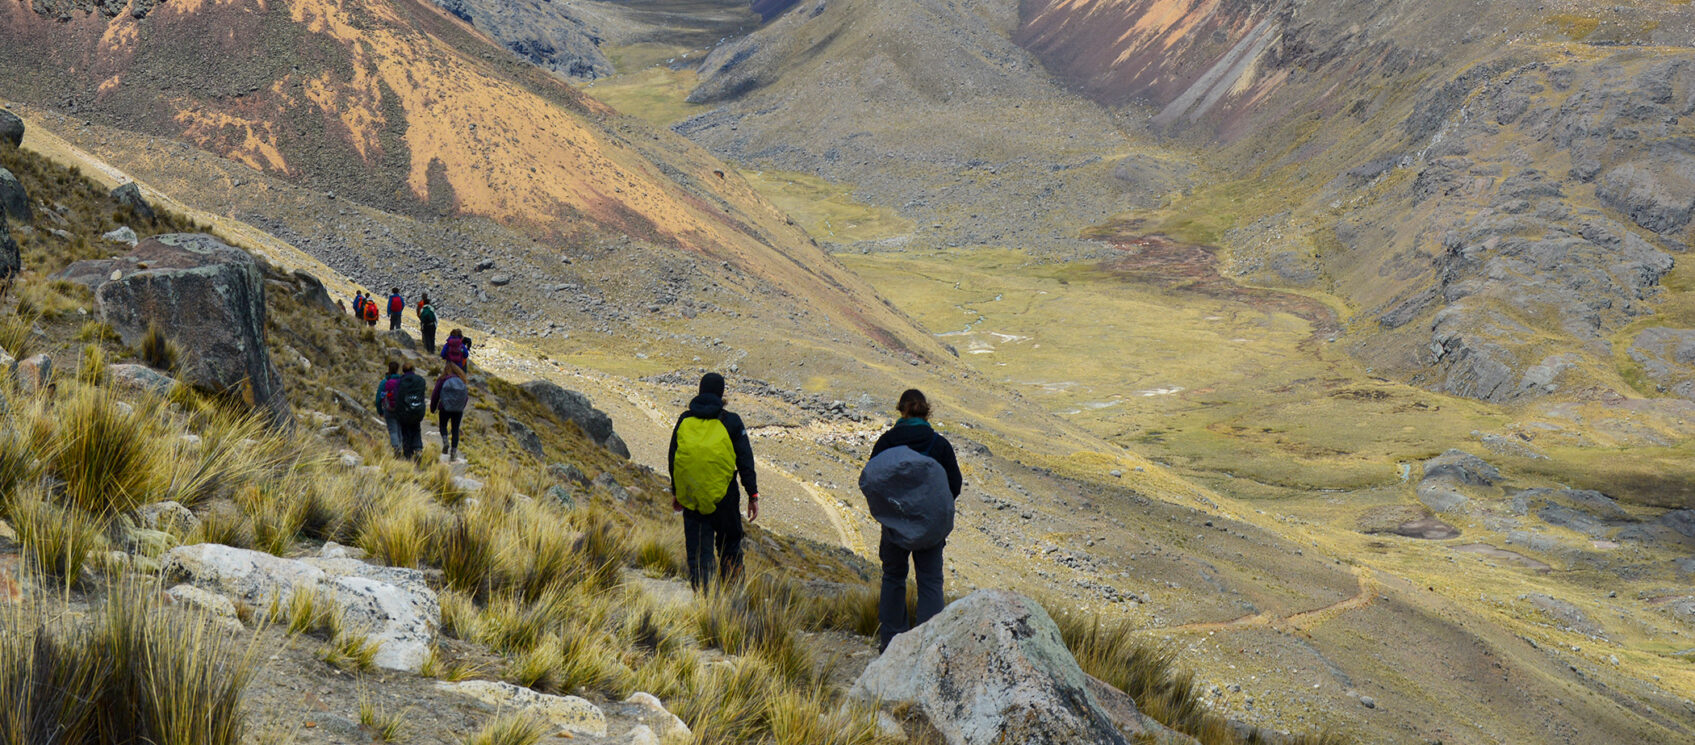 people trekking in the Peruvian mountains